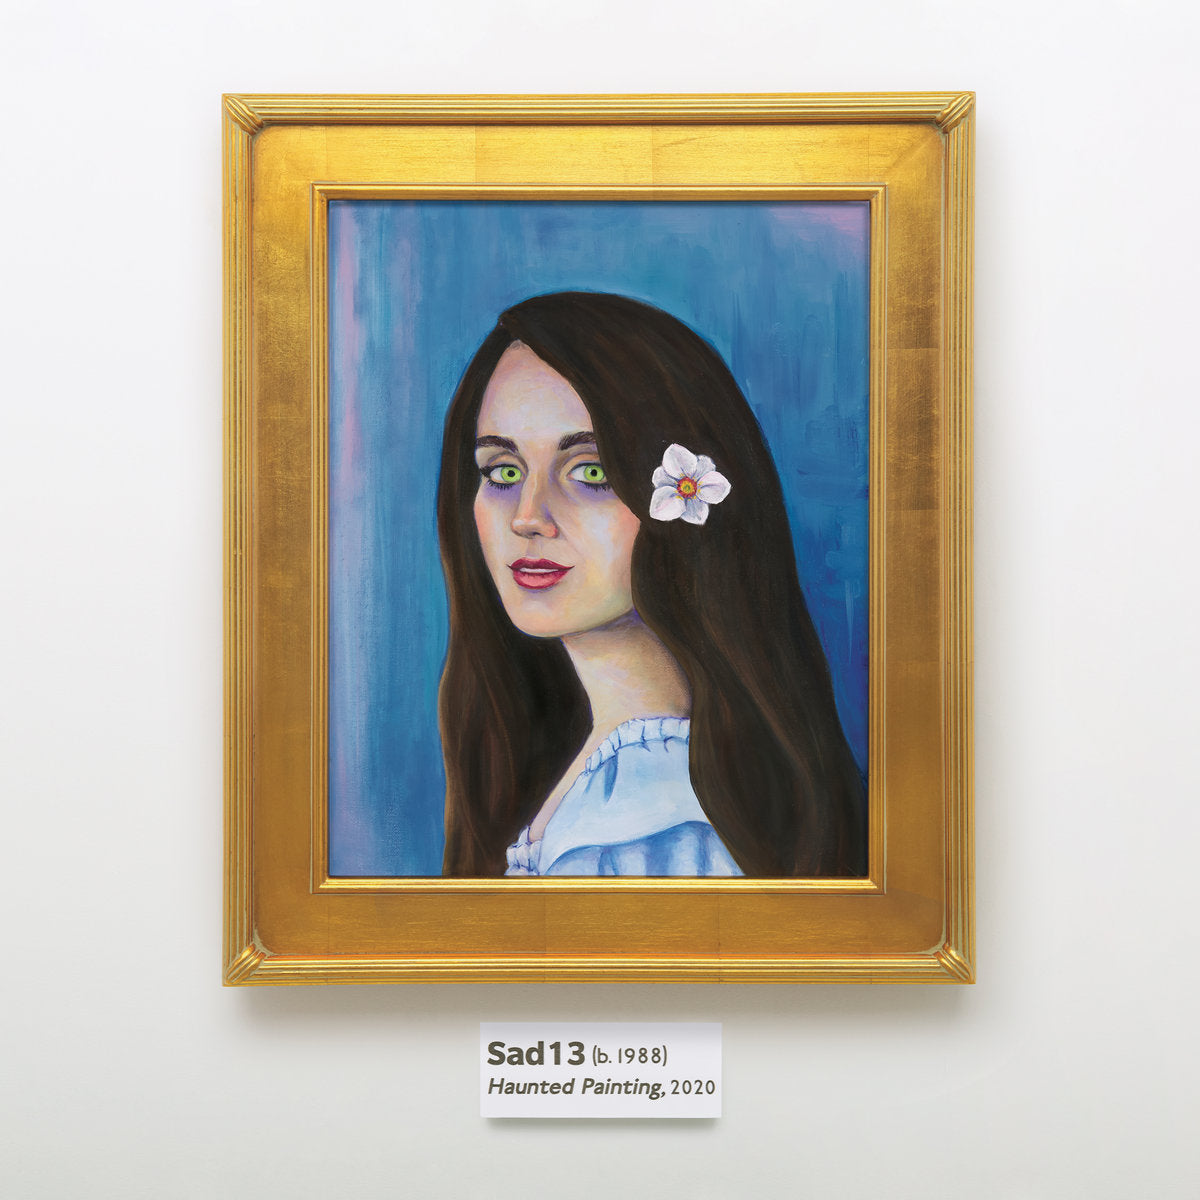 Sad13 "Haunted Painting" LP (2020)